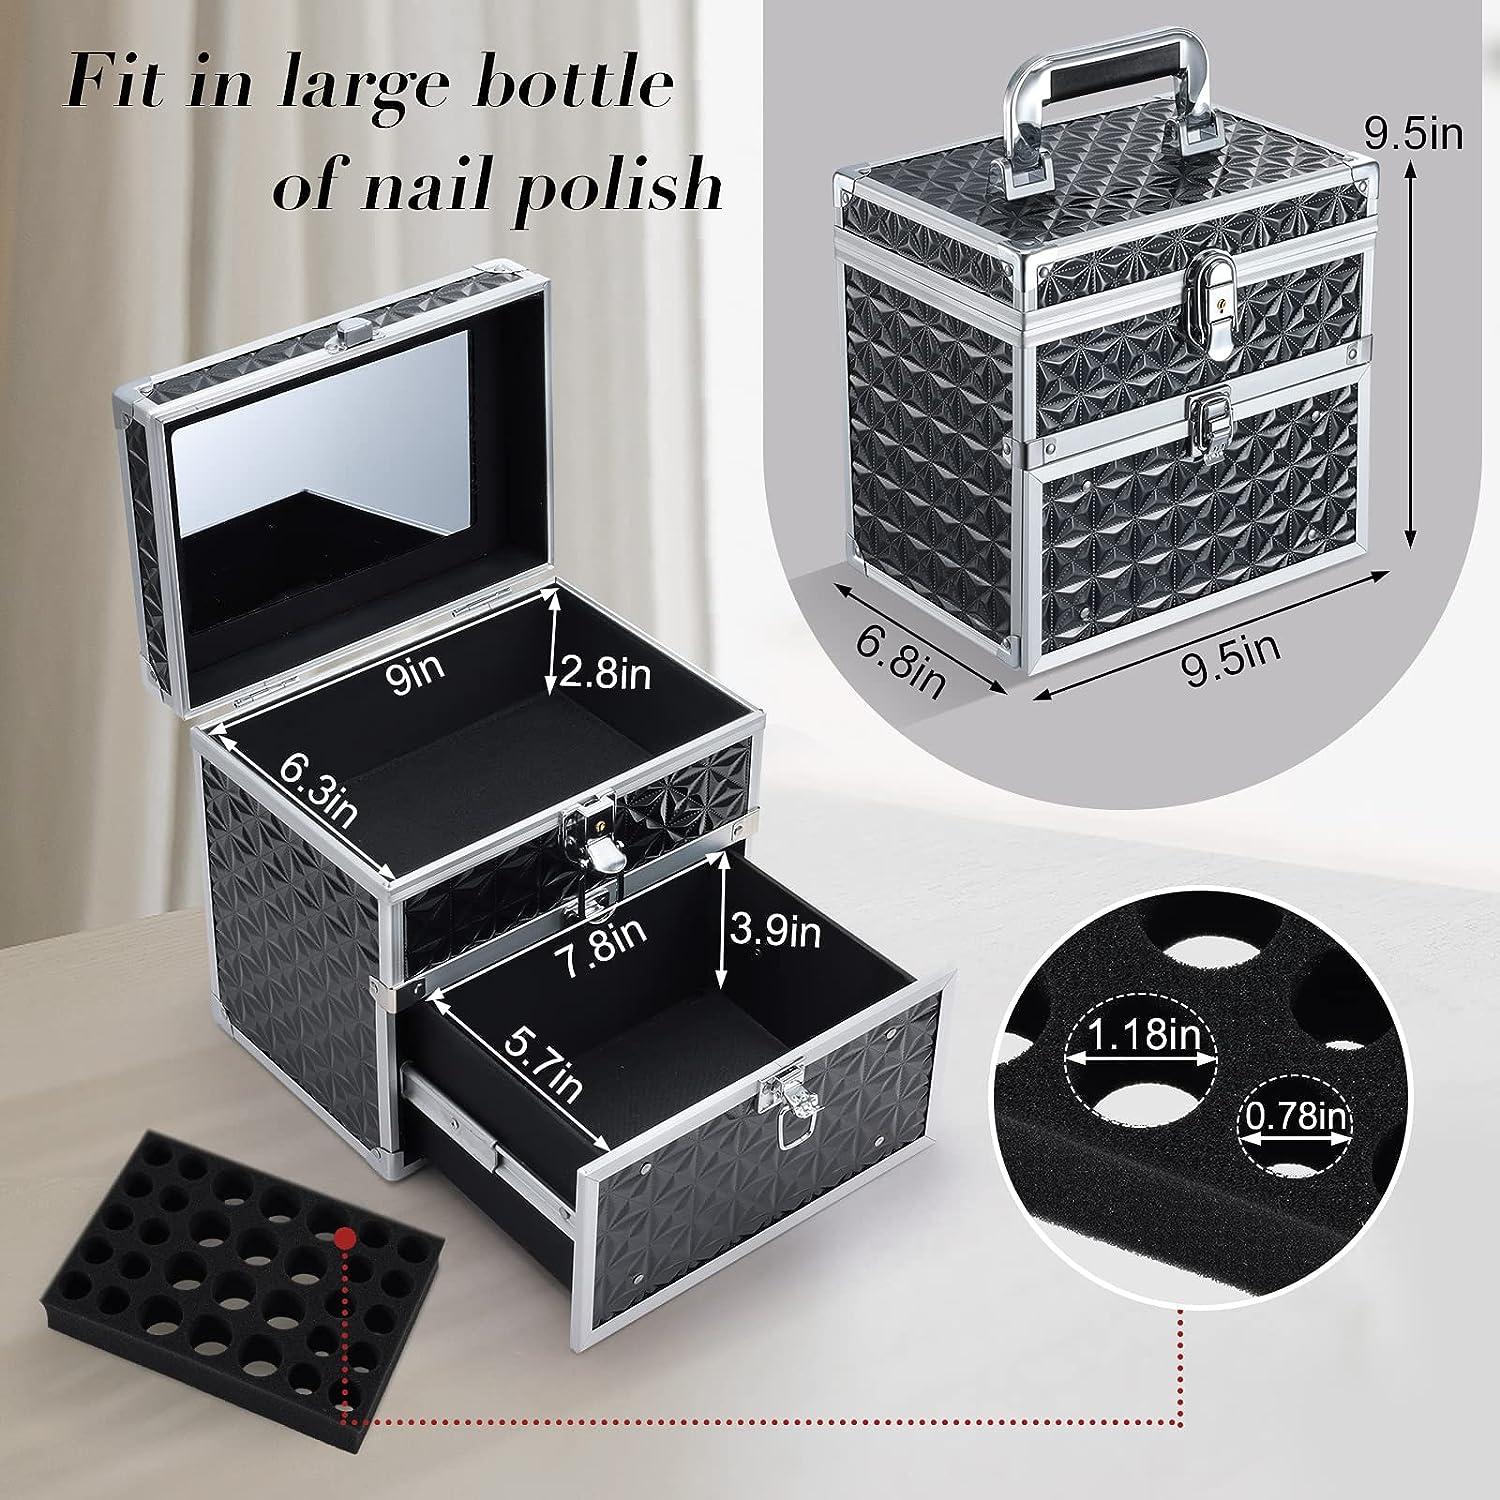 Costravio Nail Supplies Organizer Box Nail Polish Storage Case for Nail  Tech or Home Use With Drawer and Slots Travel Makeup Train Case Portable